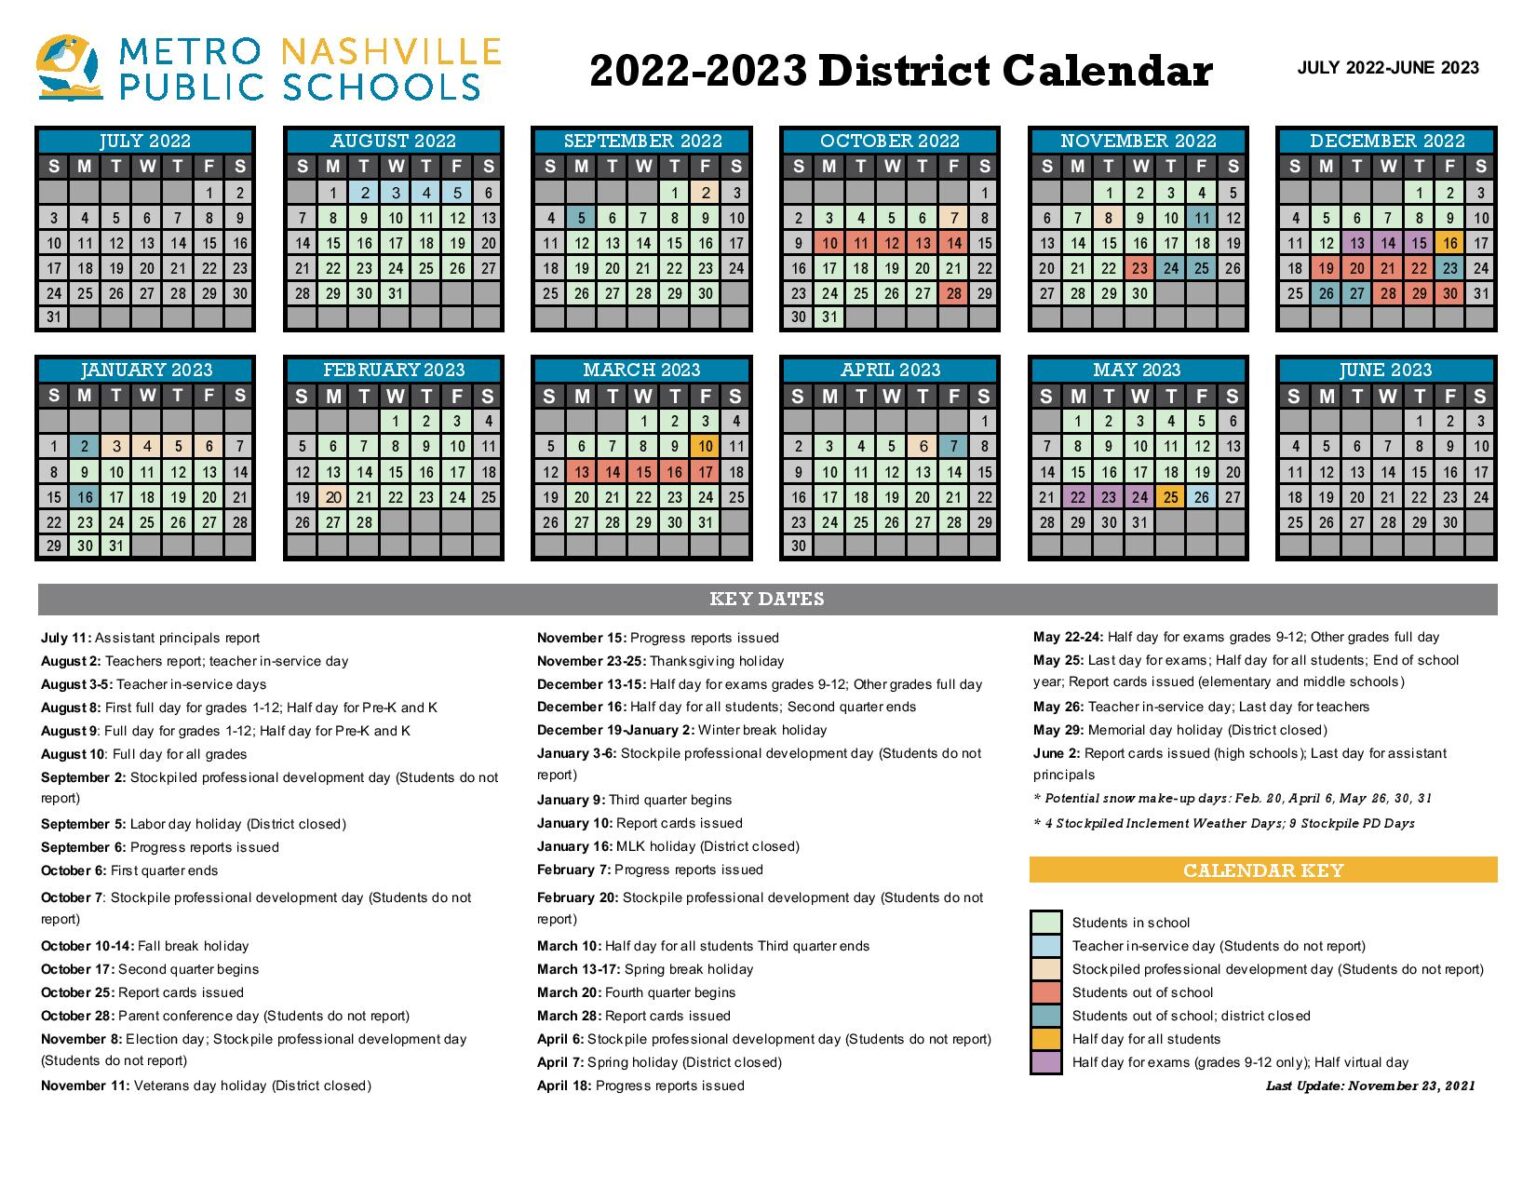 Metro Nashville Public Schools Calendar 2022-2023